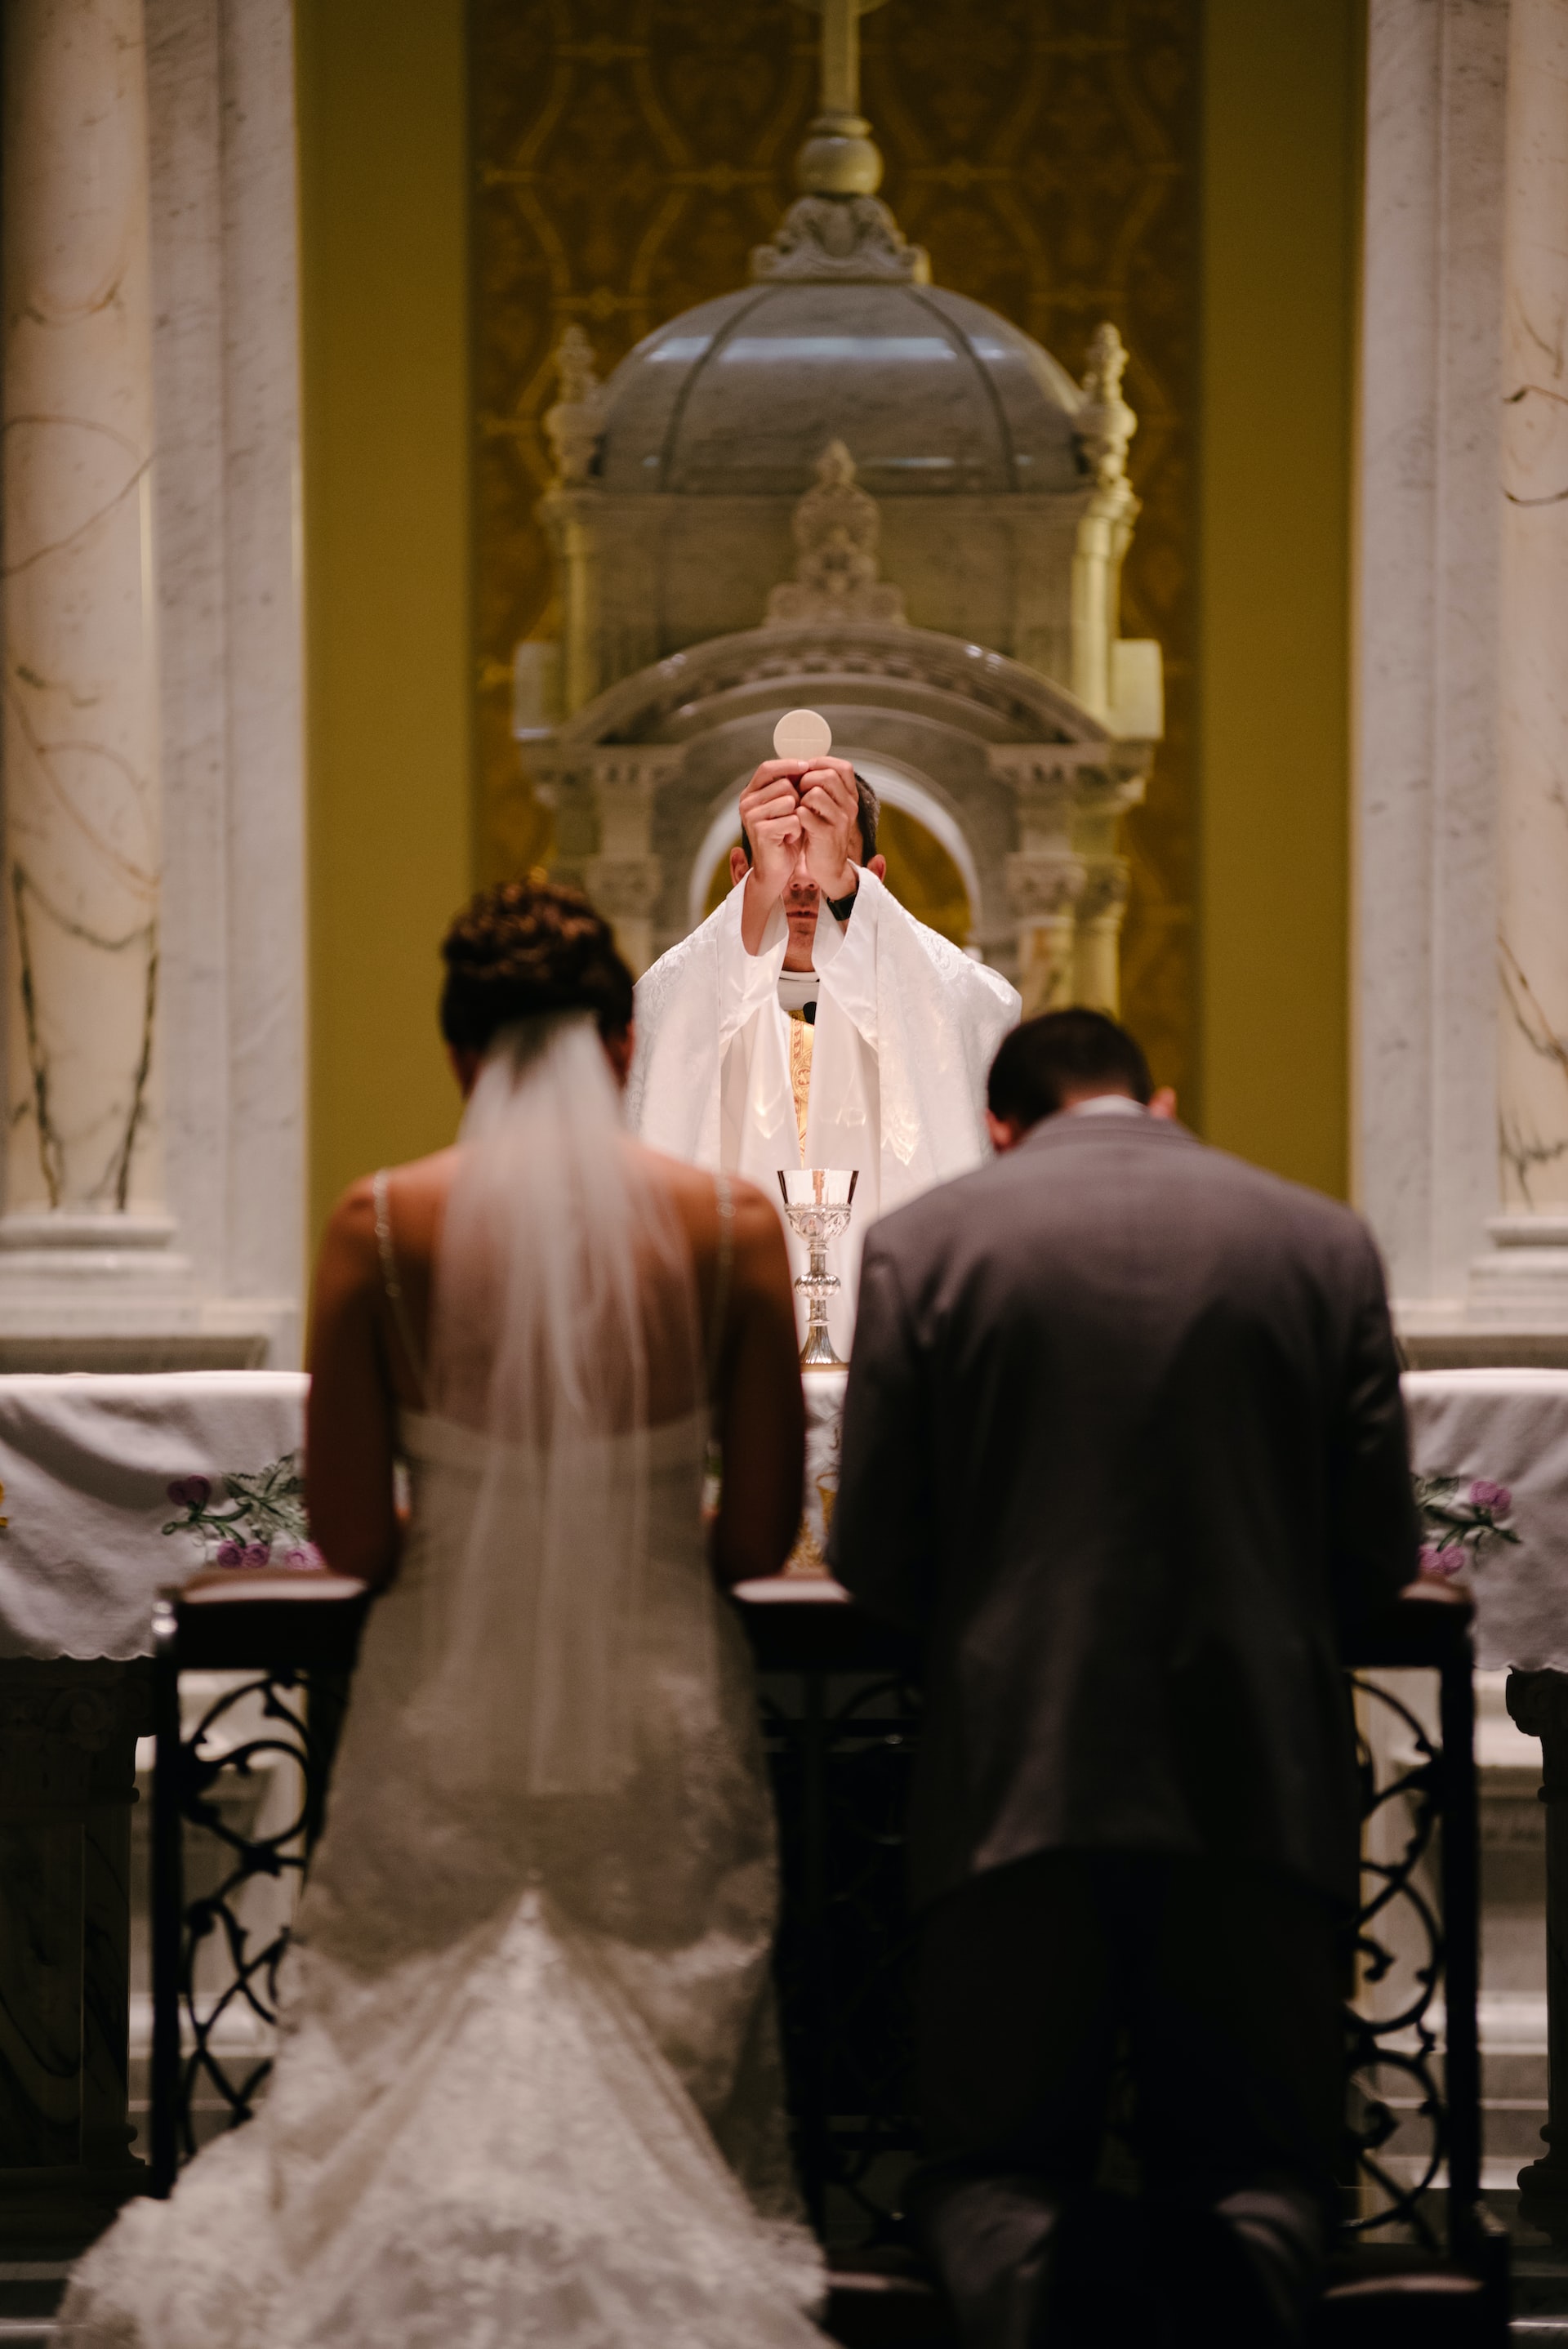 Catholic Wedding Prayers For The Bride And Groom - Ways To Customize Your Own Catholic Wedding Cerem